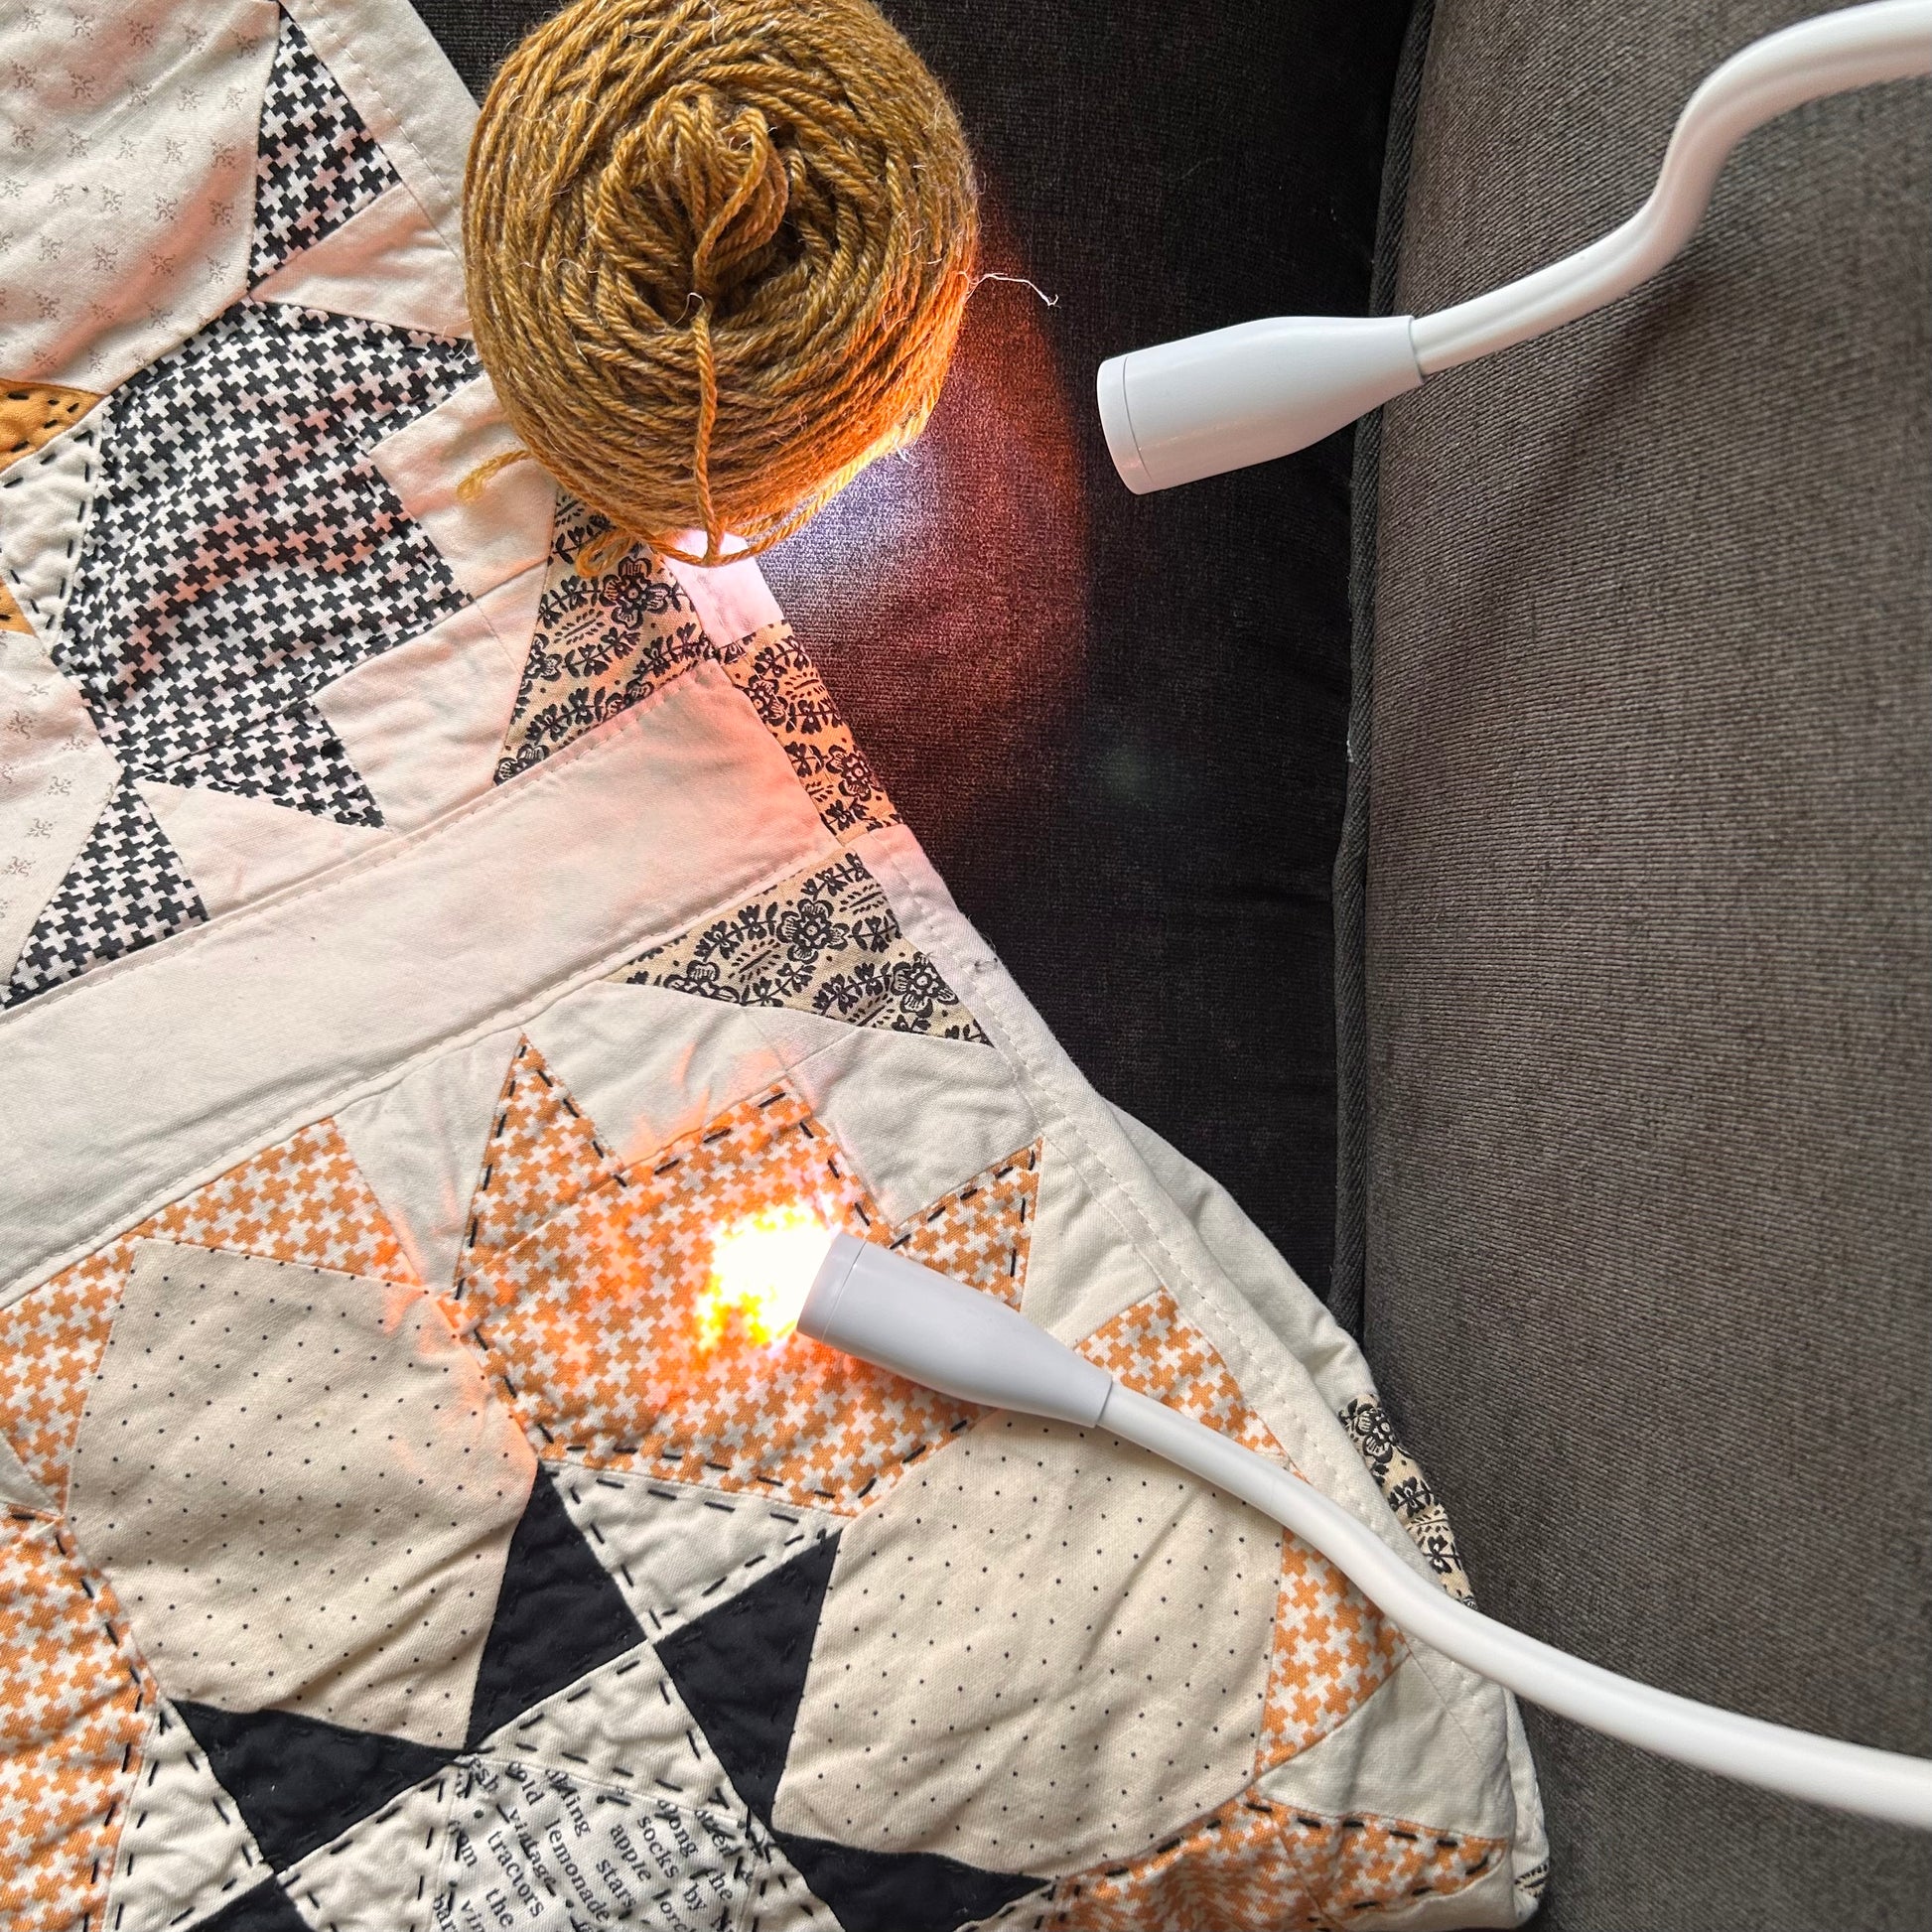 Lumos Knitting Light